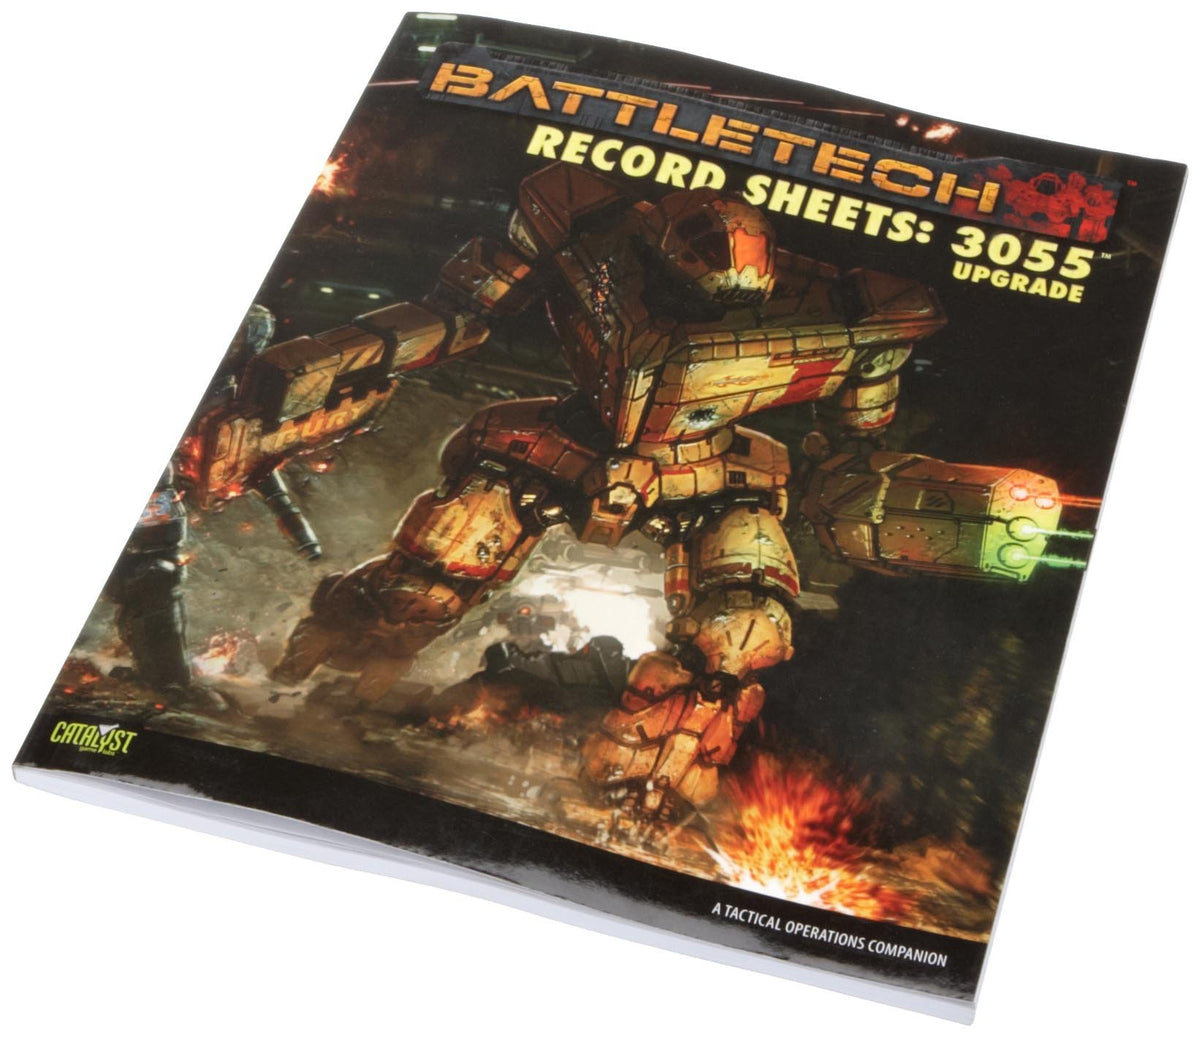 Battletech Record Sheets 3055 Upgrade